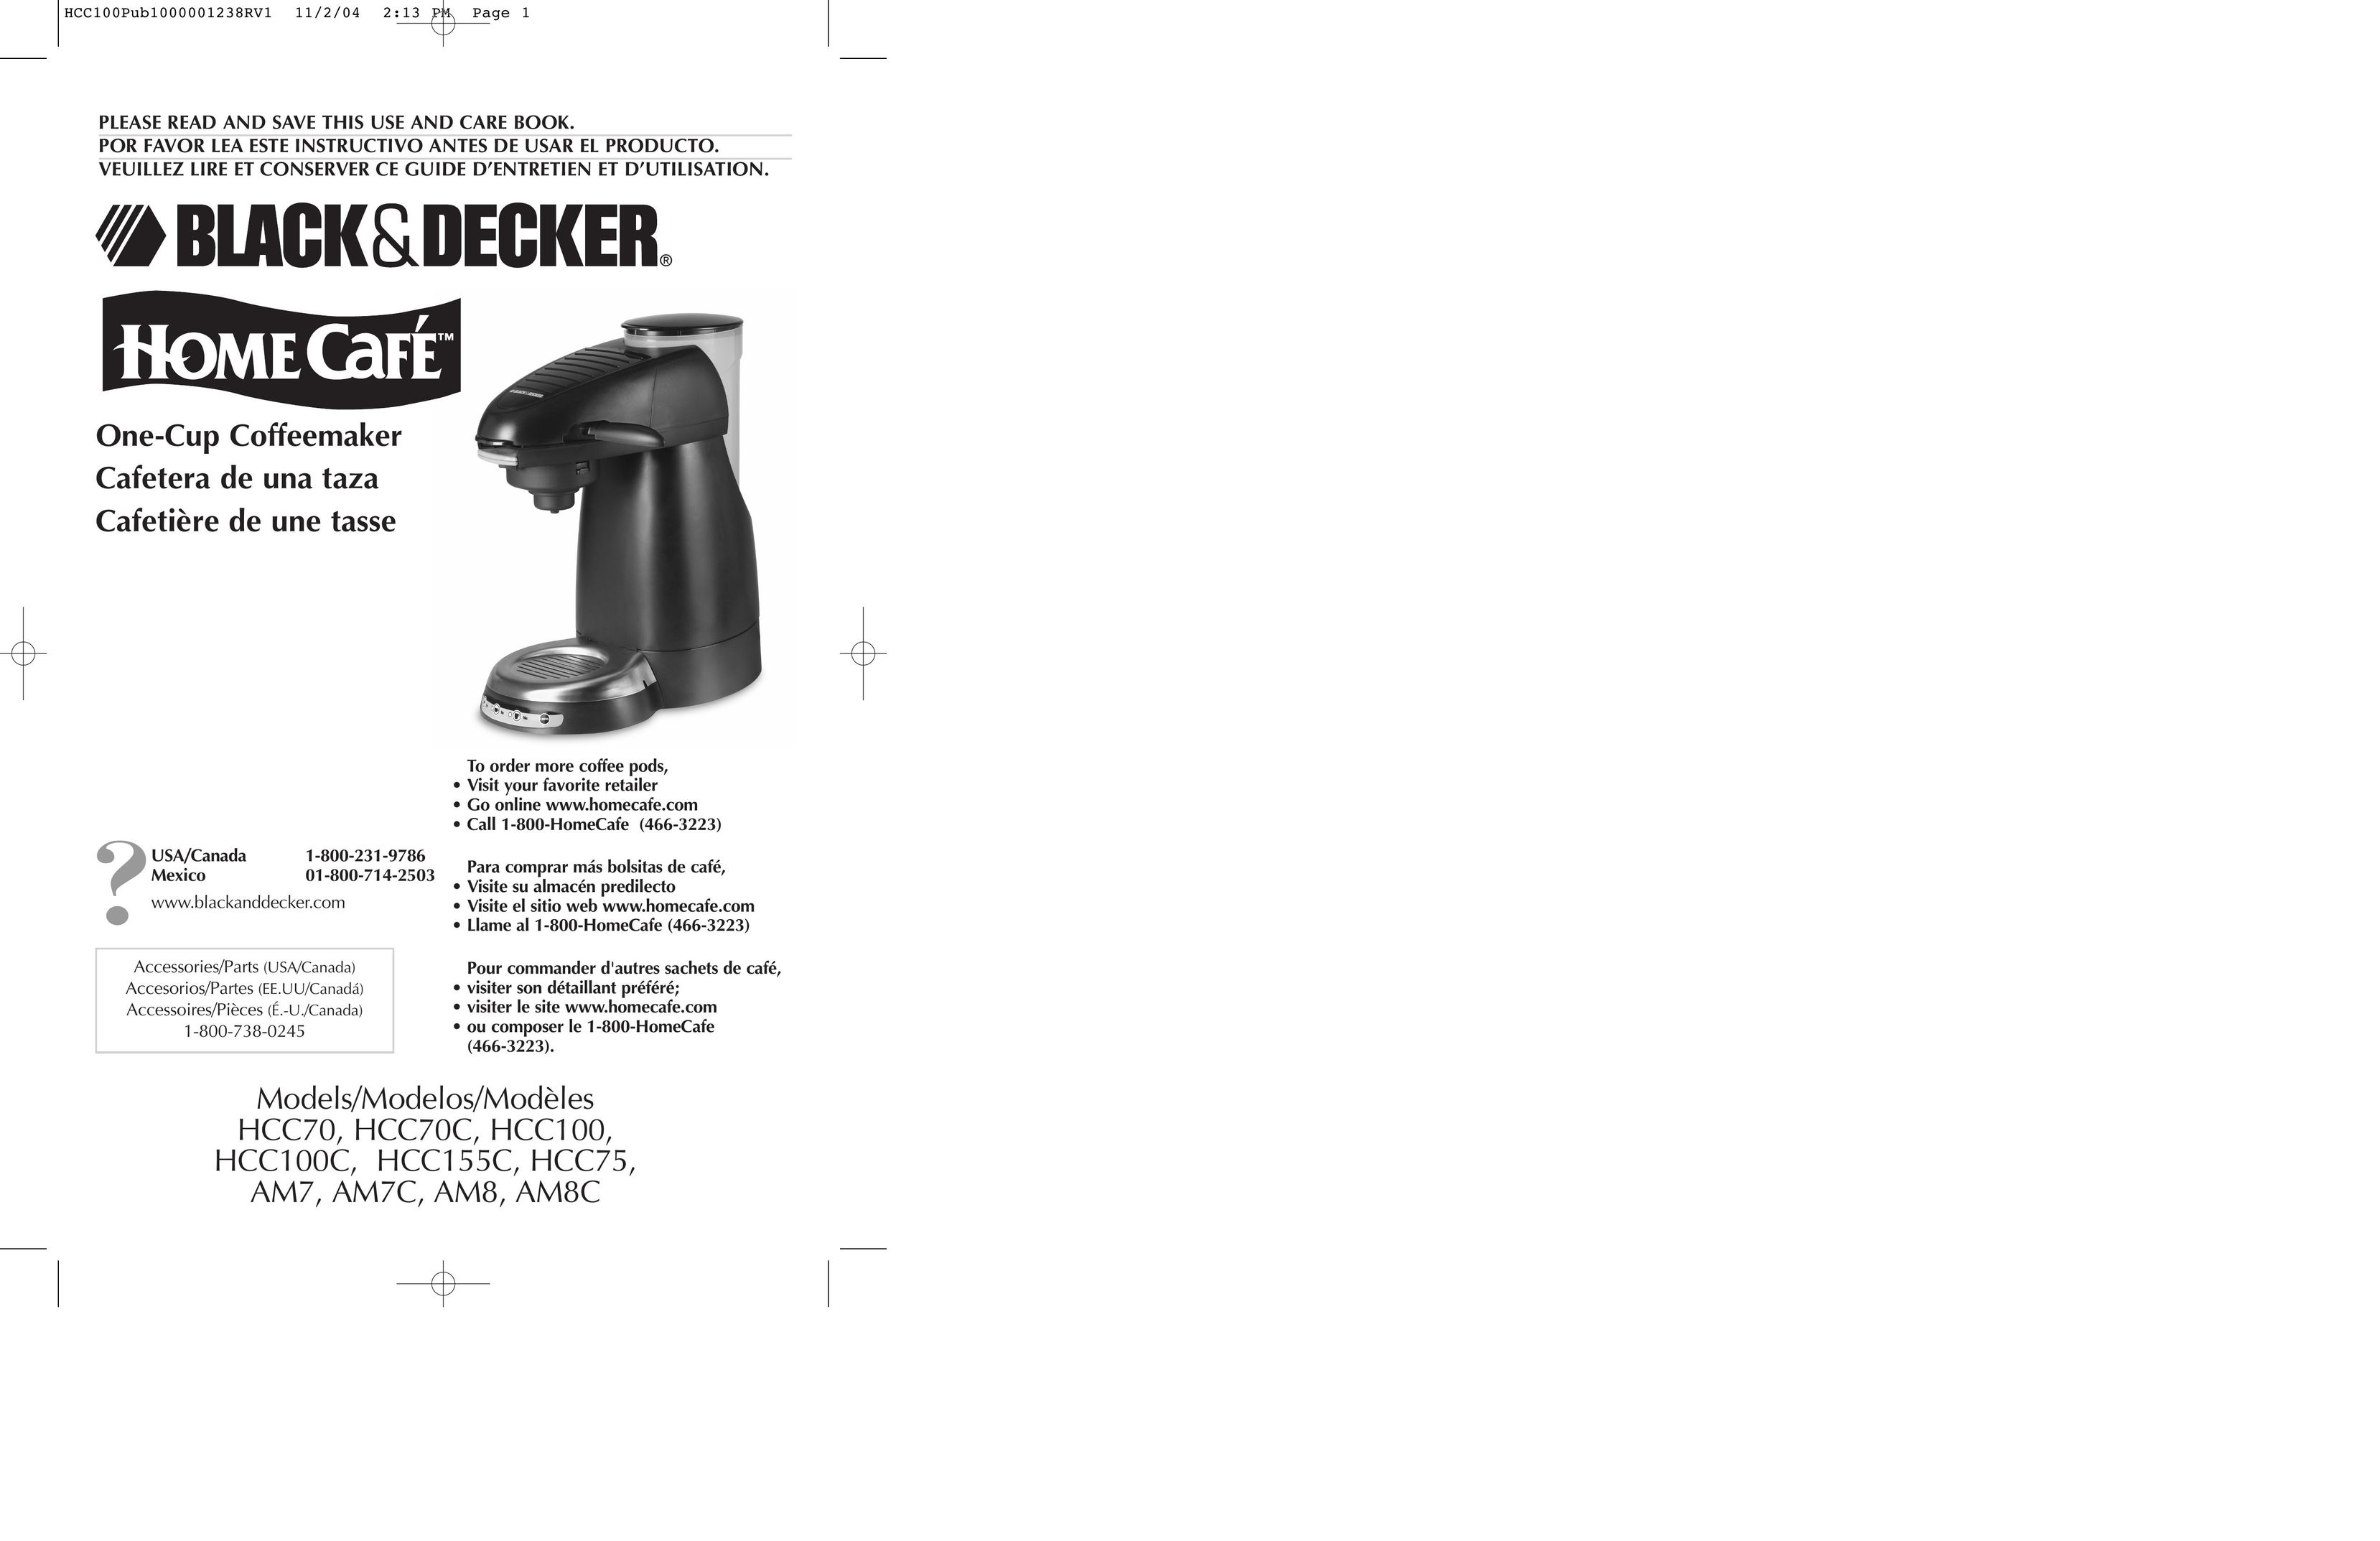 Black & Decker AM8C Coffeemaker User Manual